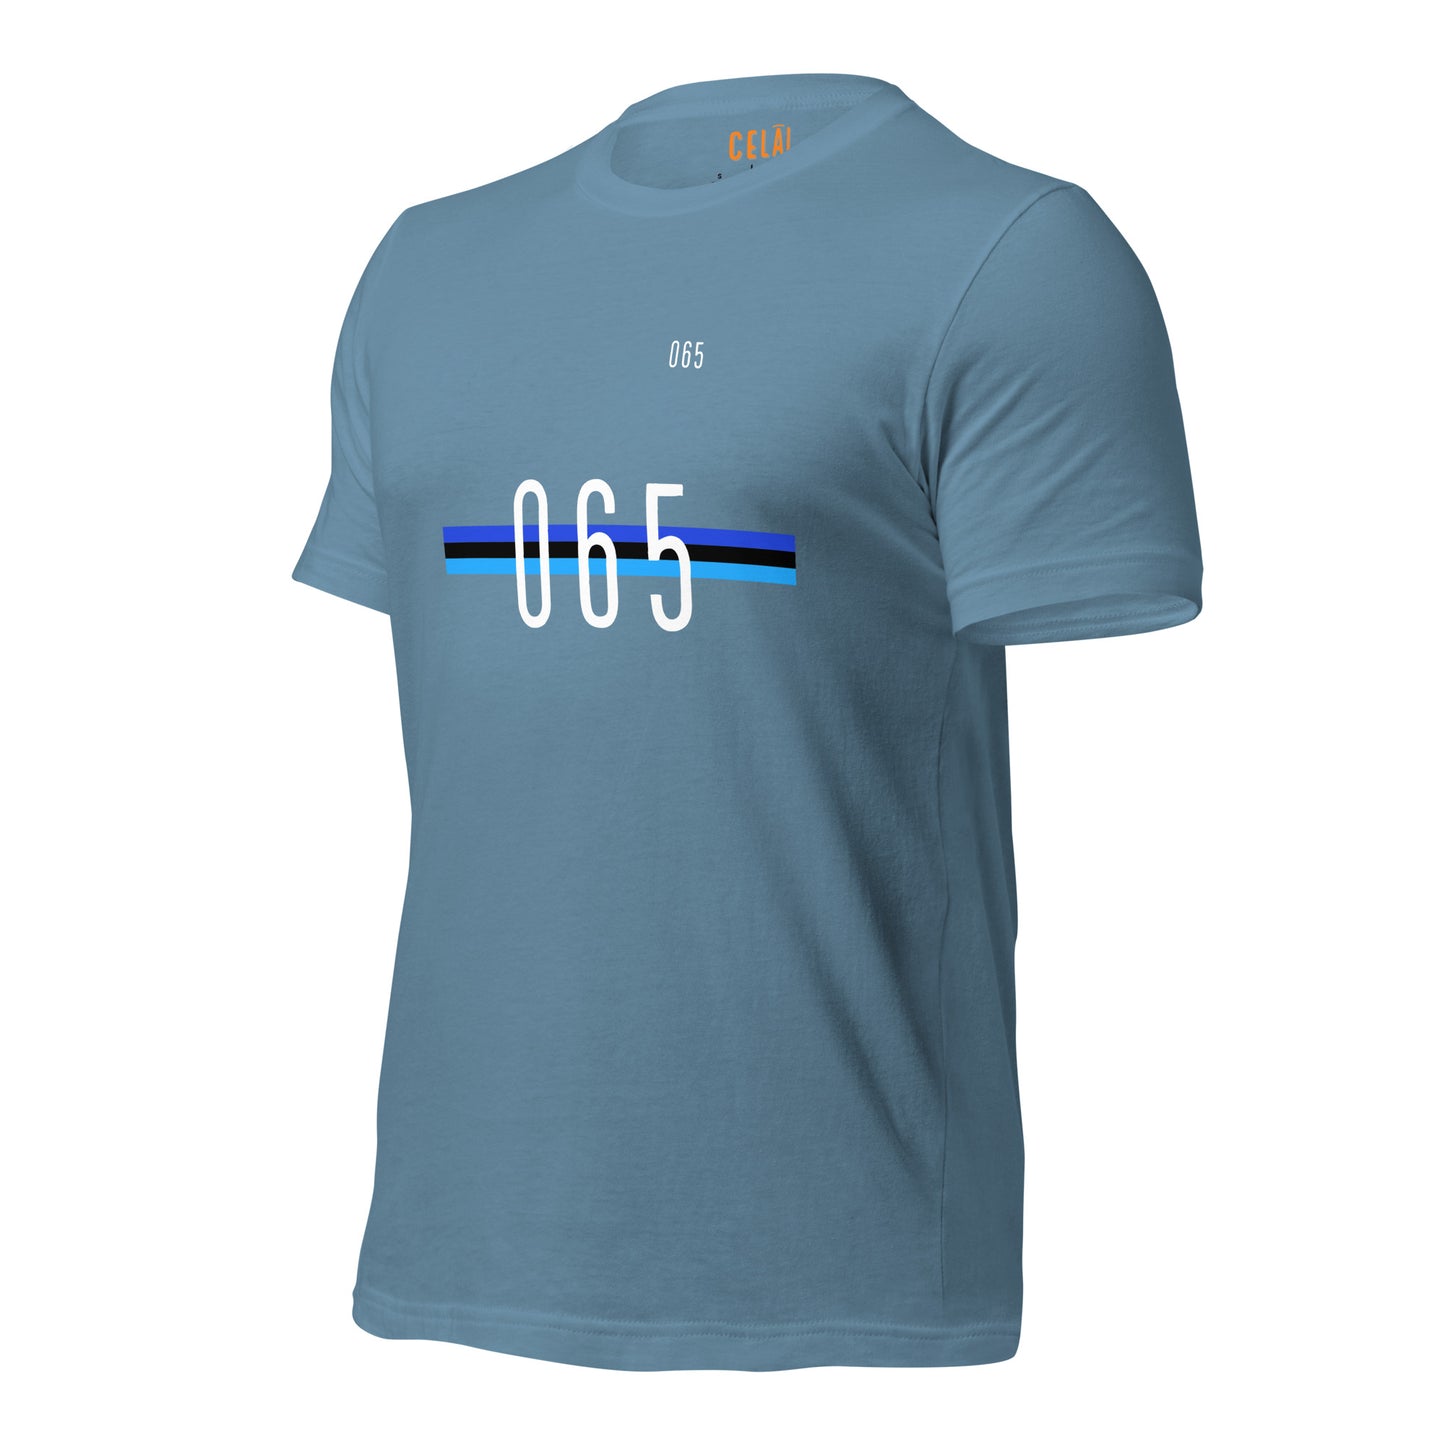 065 Unisex t-shirt